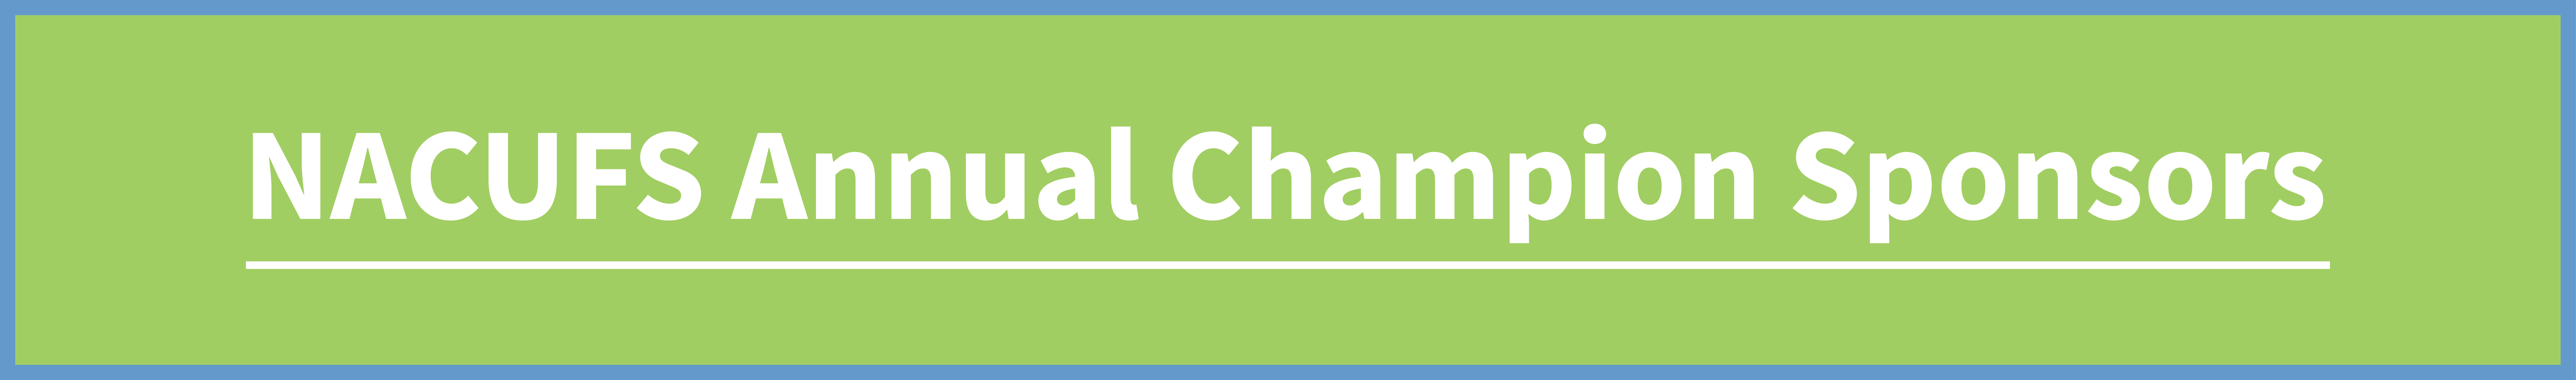 Annual CHampion Sponsors Banner